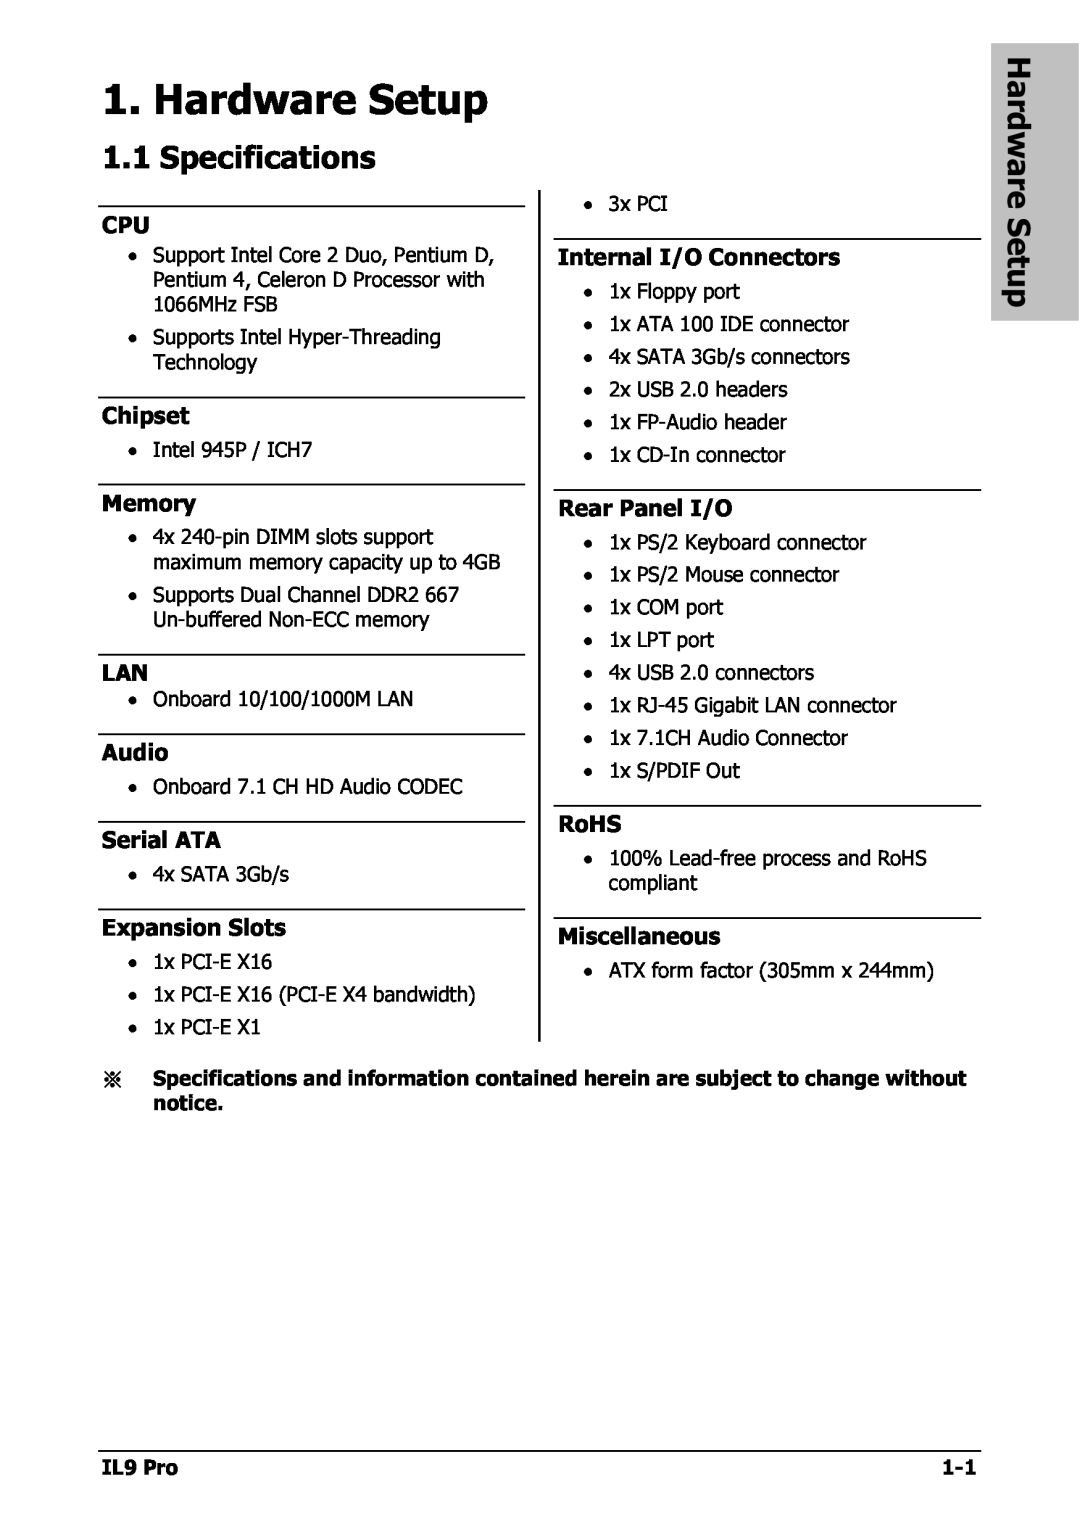 Nextar IL9 PRO appendix Hardware Setup, Specifications 